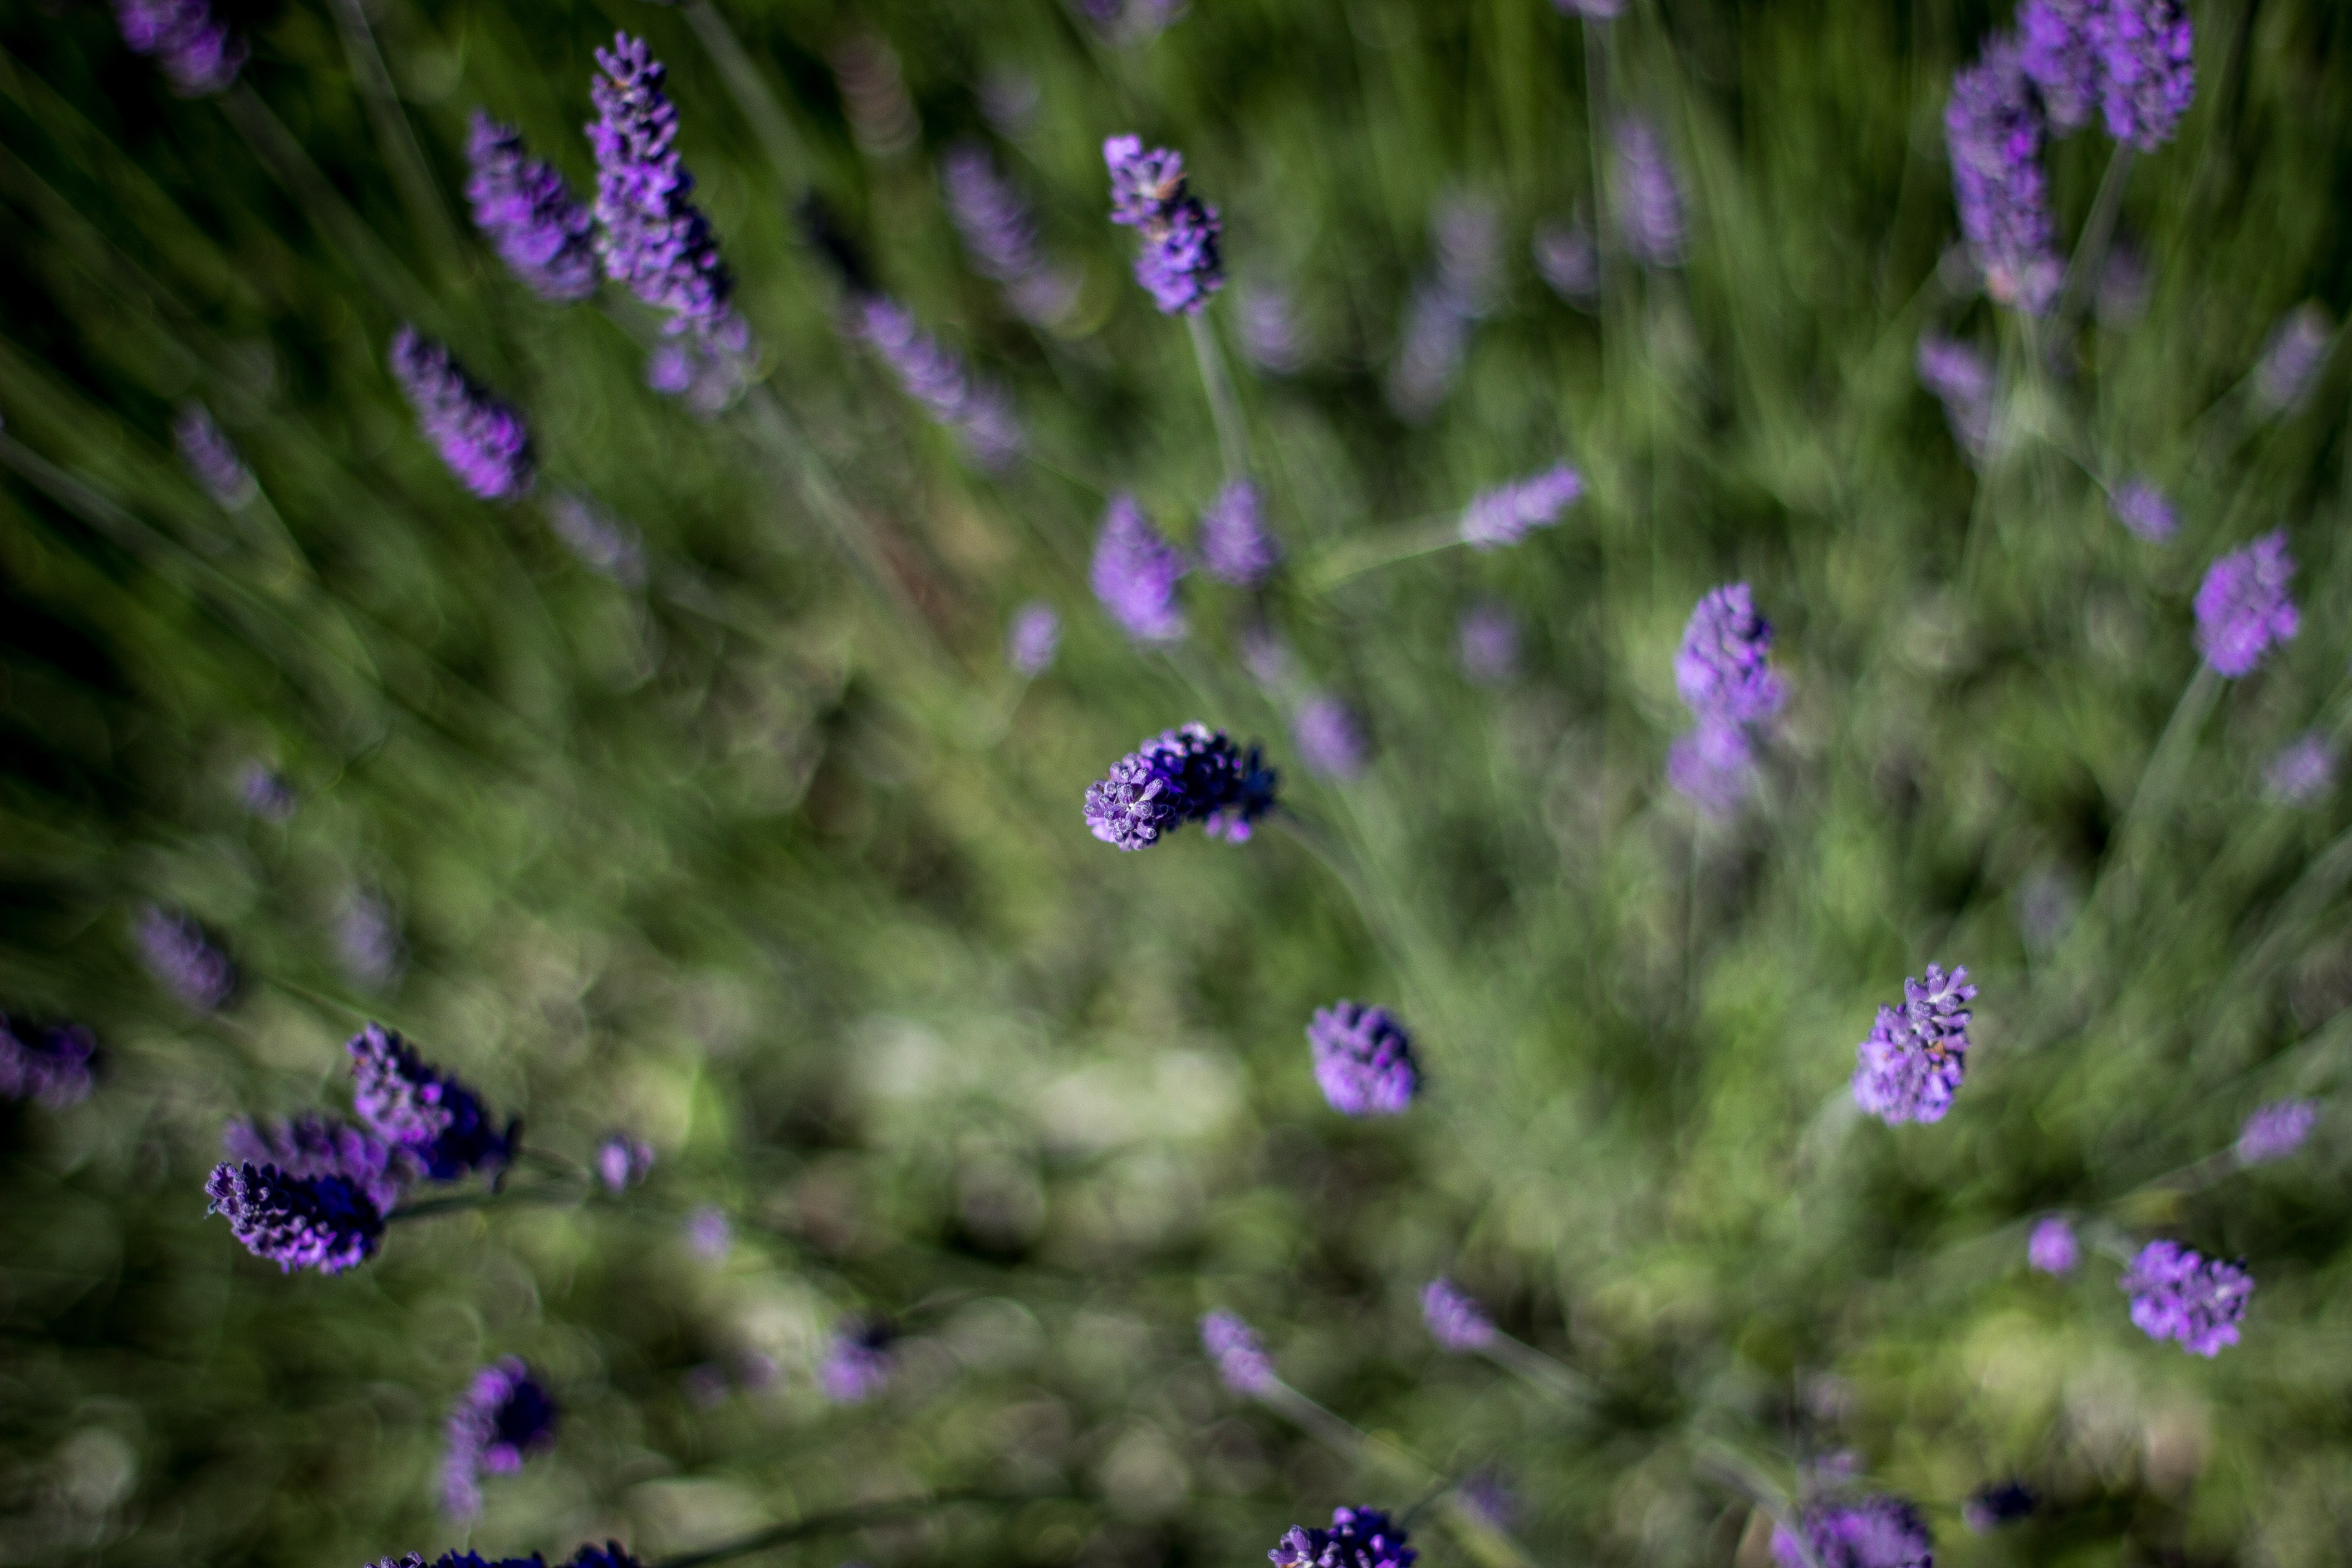 purple lavender flowers